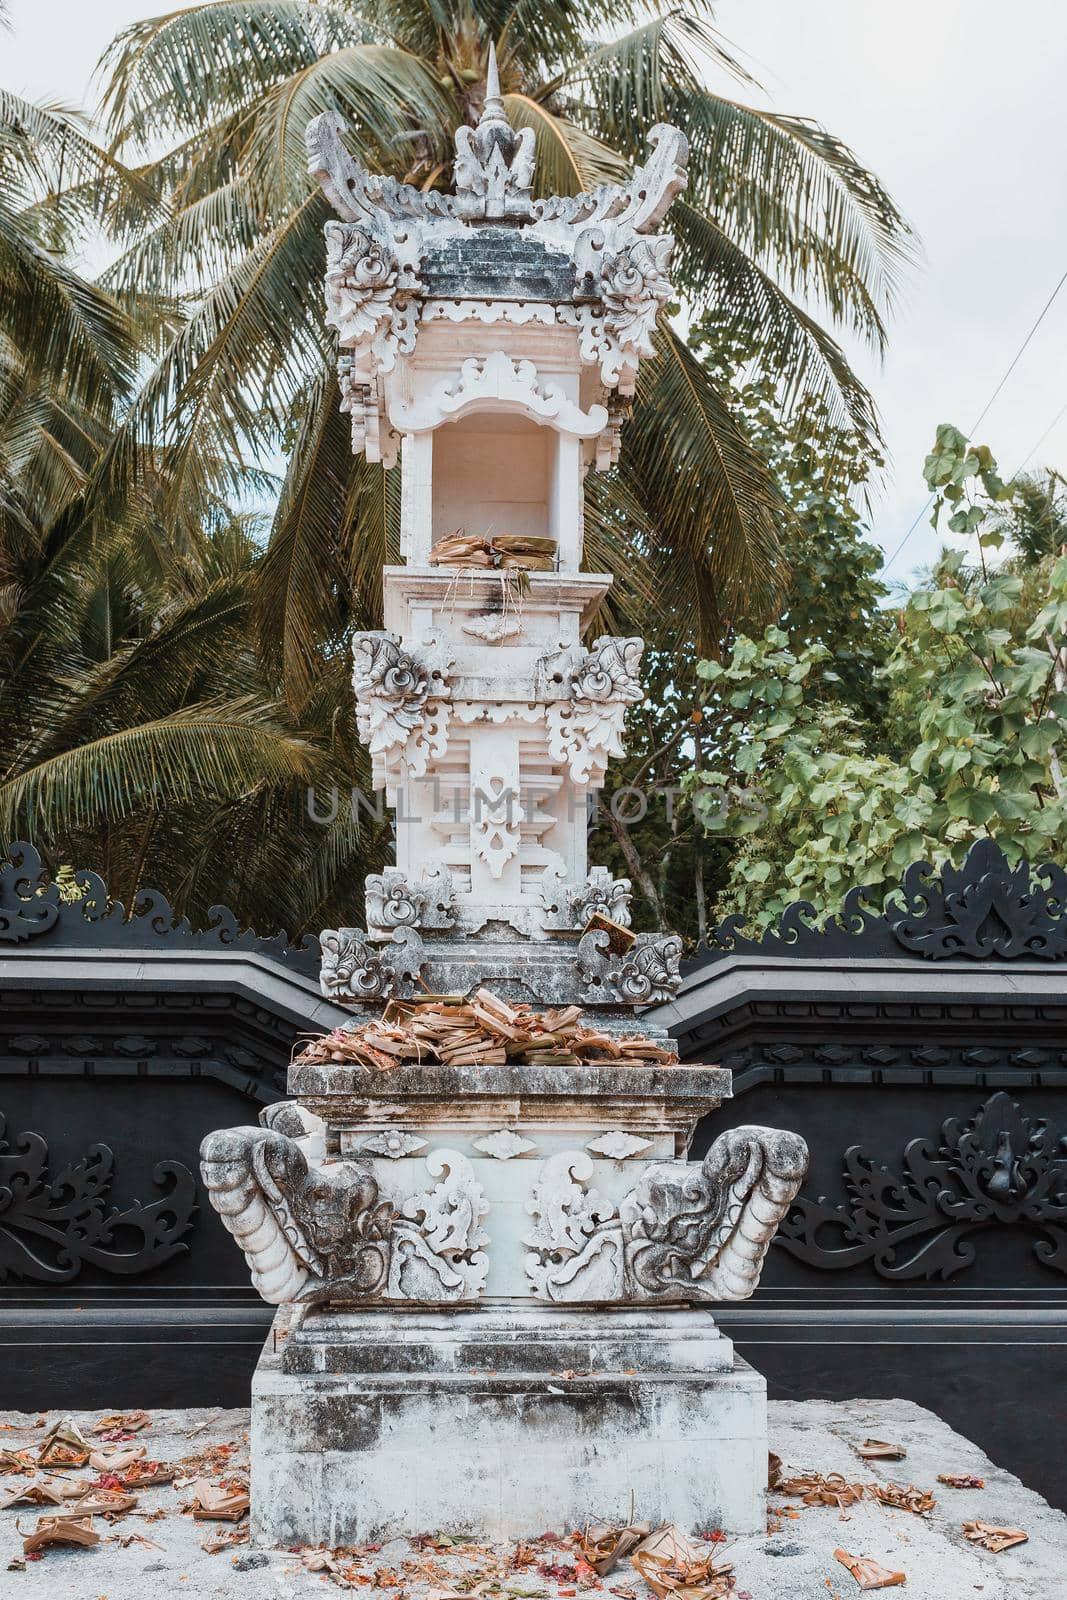 Small Hindu Temple, Nusa penida island, Bali Indonesia by artush